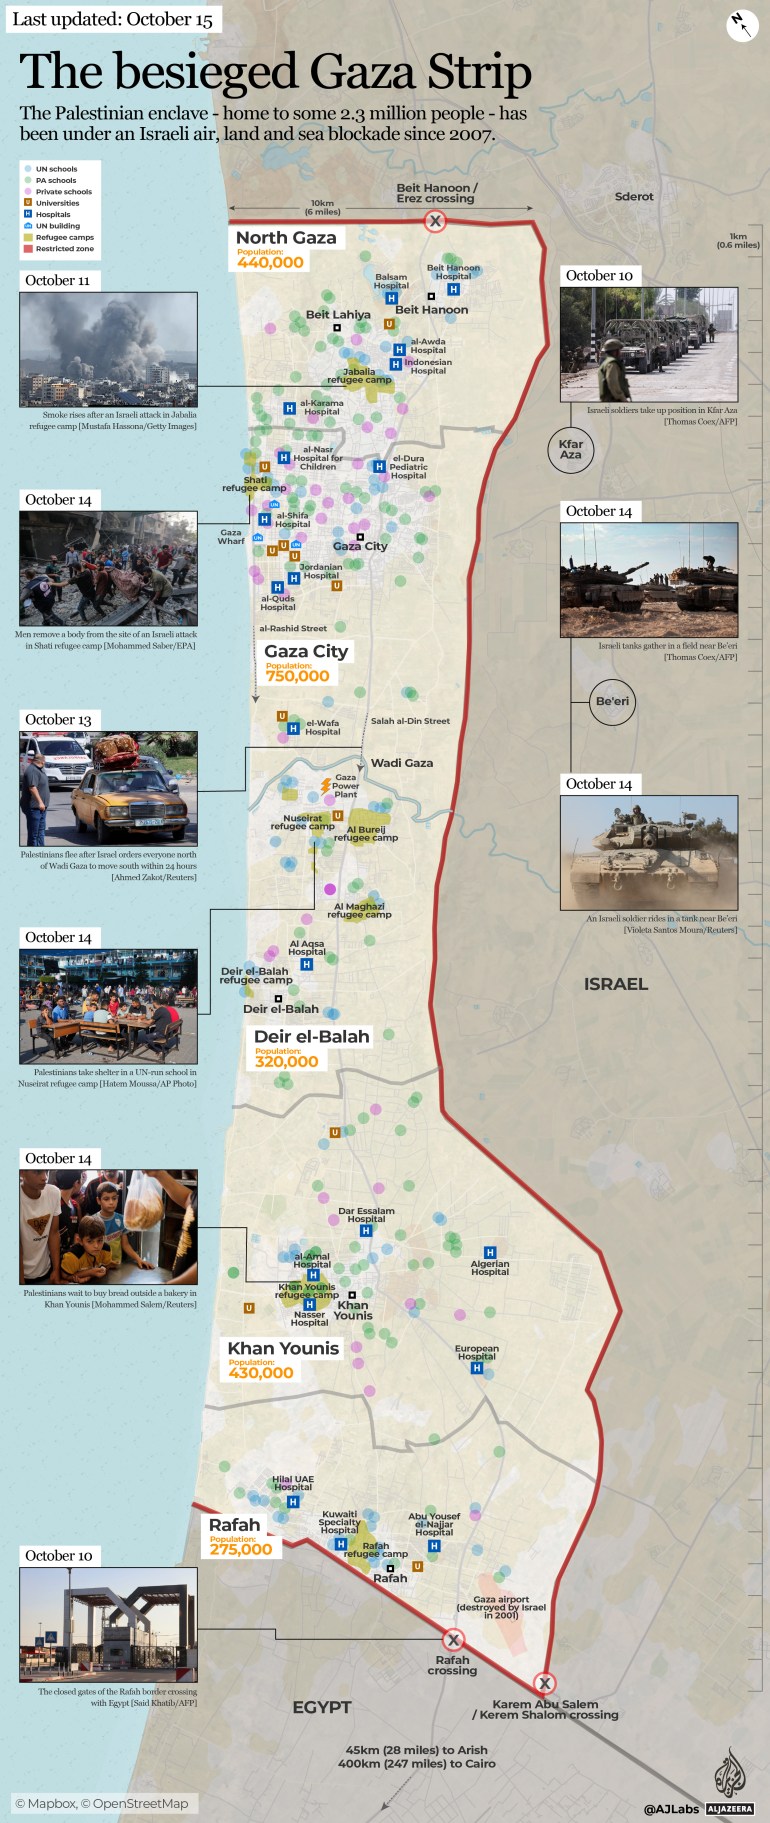 INTERAKTIF - Ringkasan peristiwa Gaza yang terkepung 15-80-1697393473 Oktober